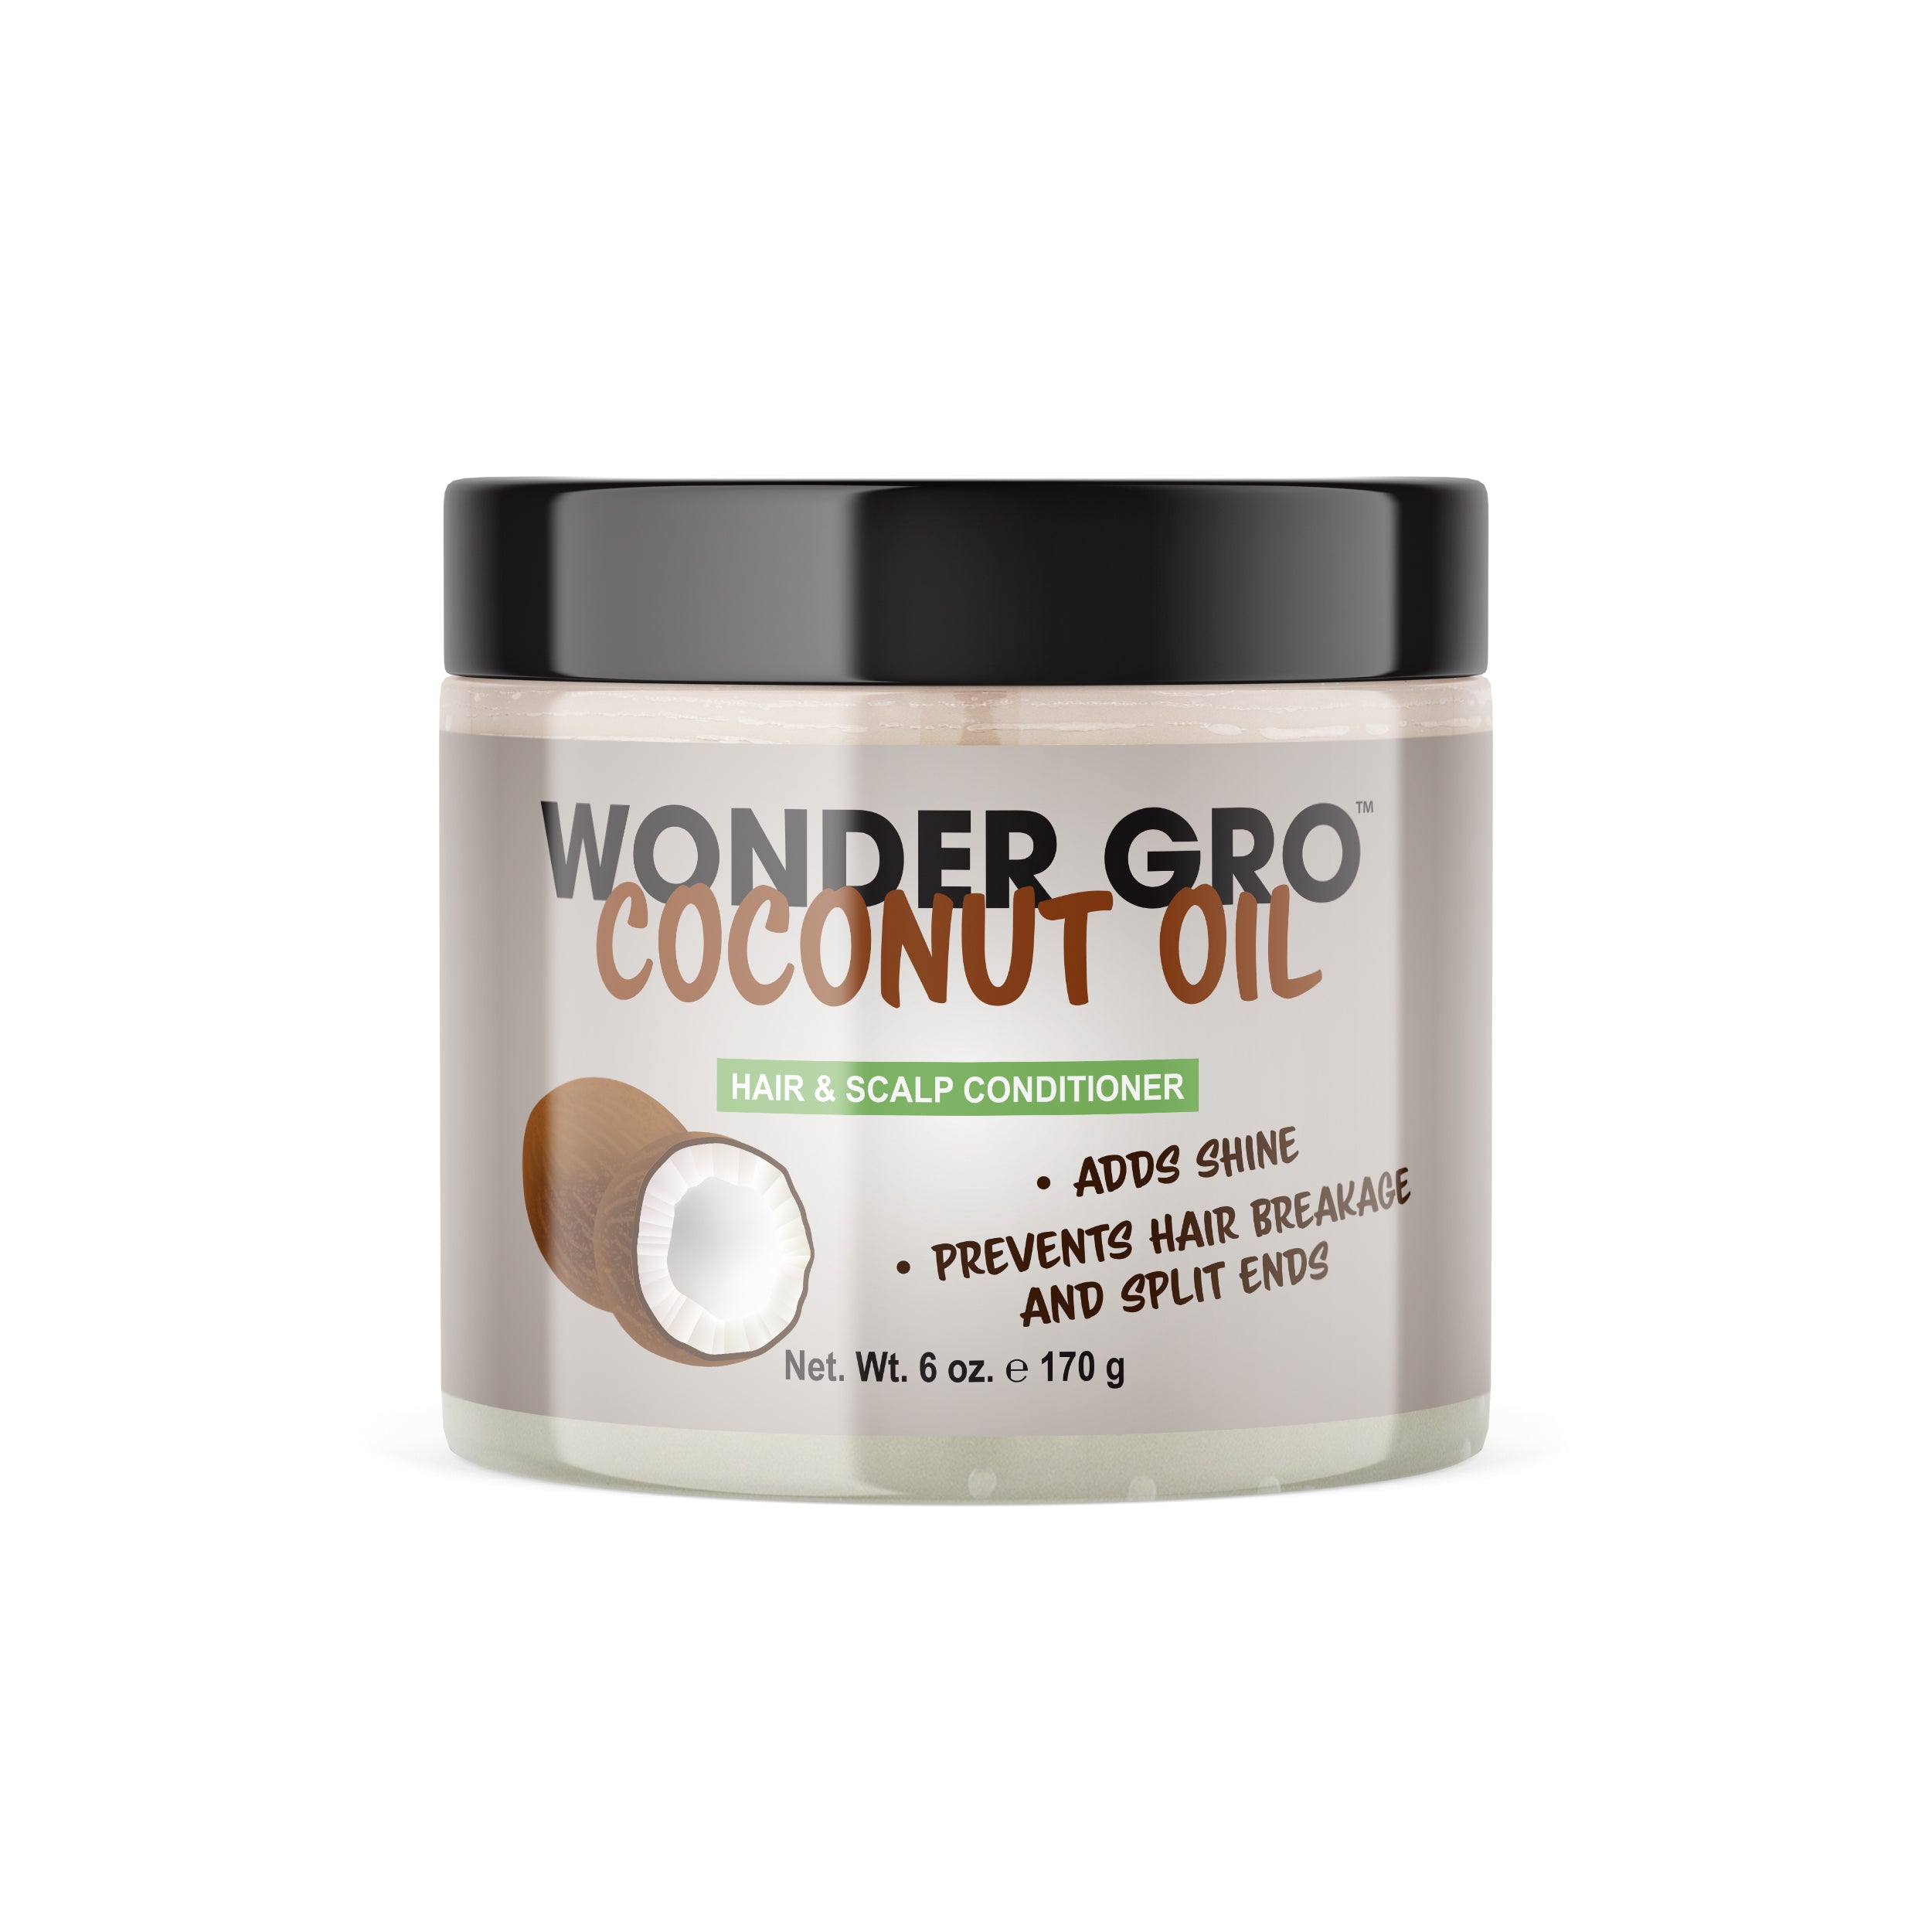 Wonder Gro Coconut Oil Hair & Scalp Conditioner